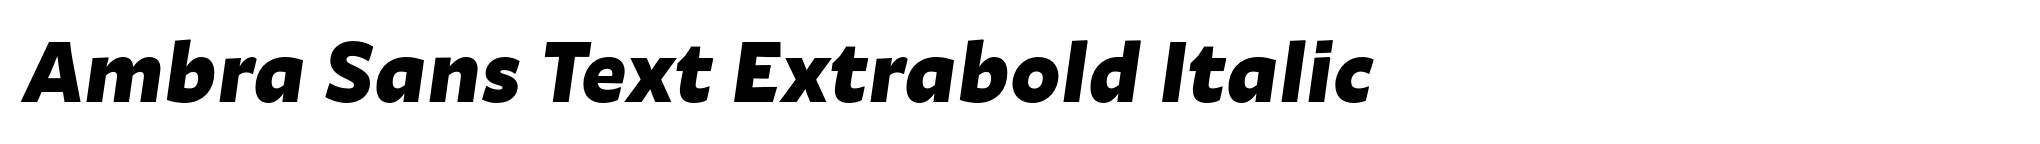 Ambra Sans Text Extrabold Italic image